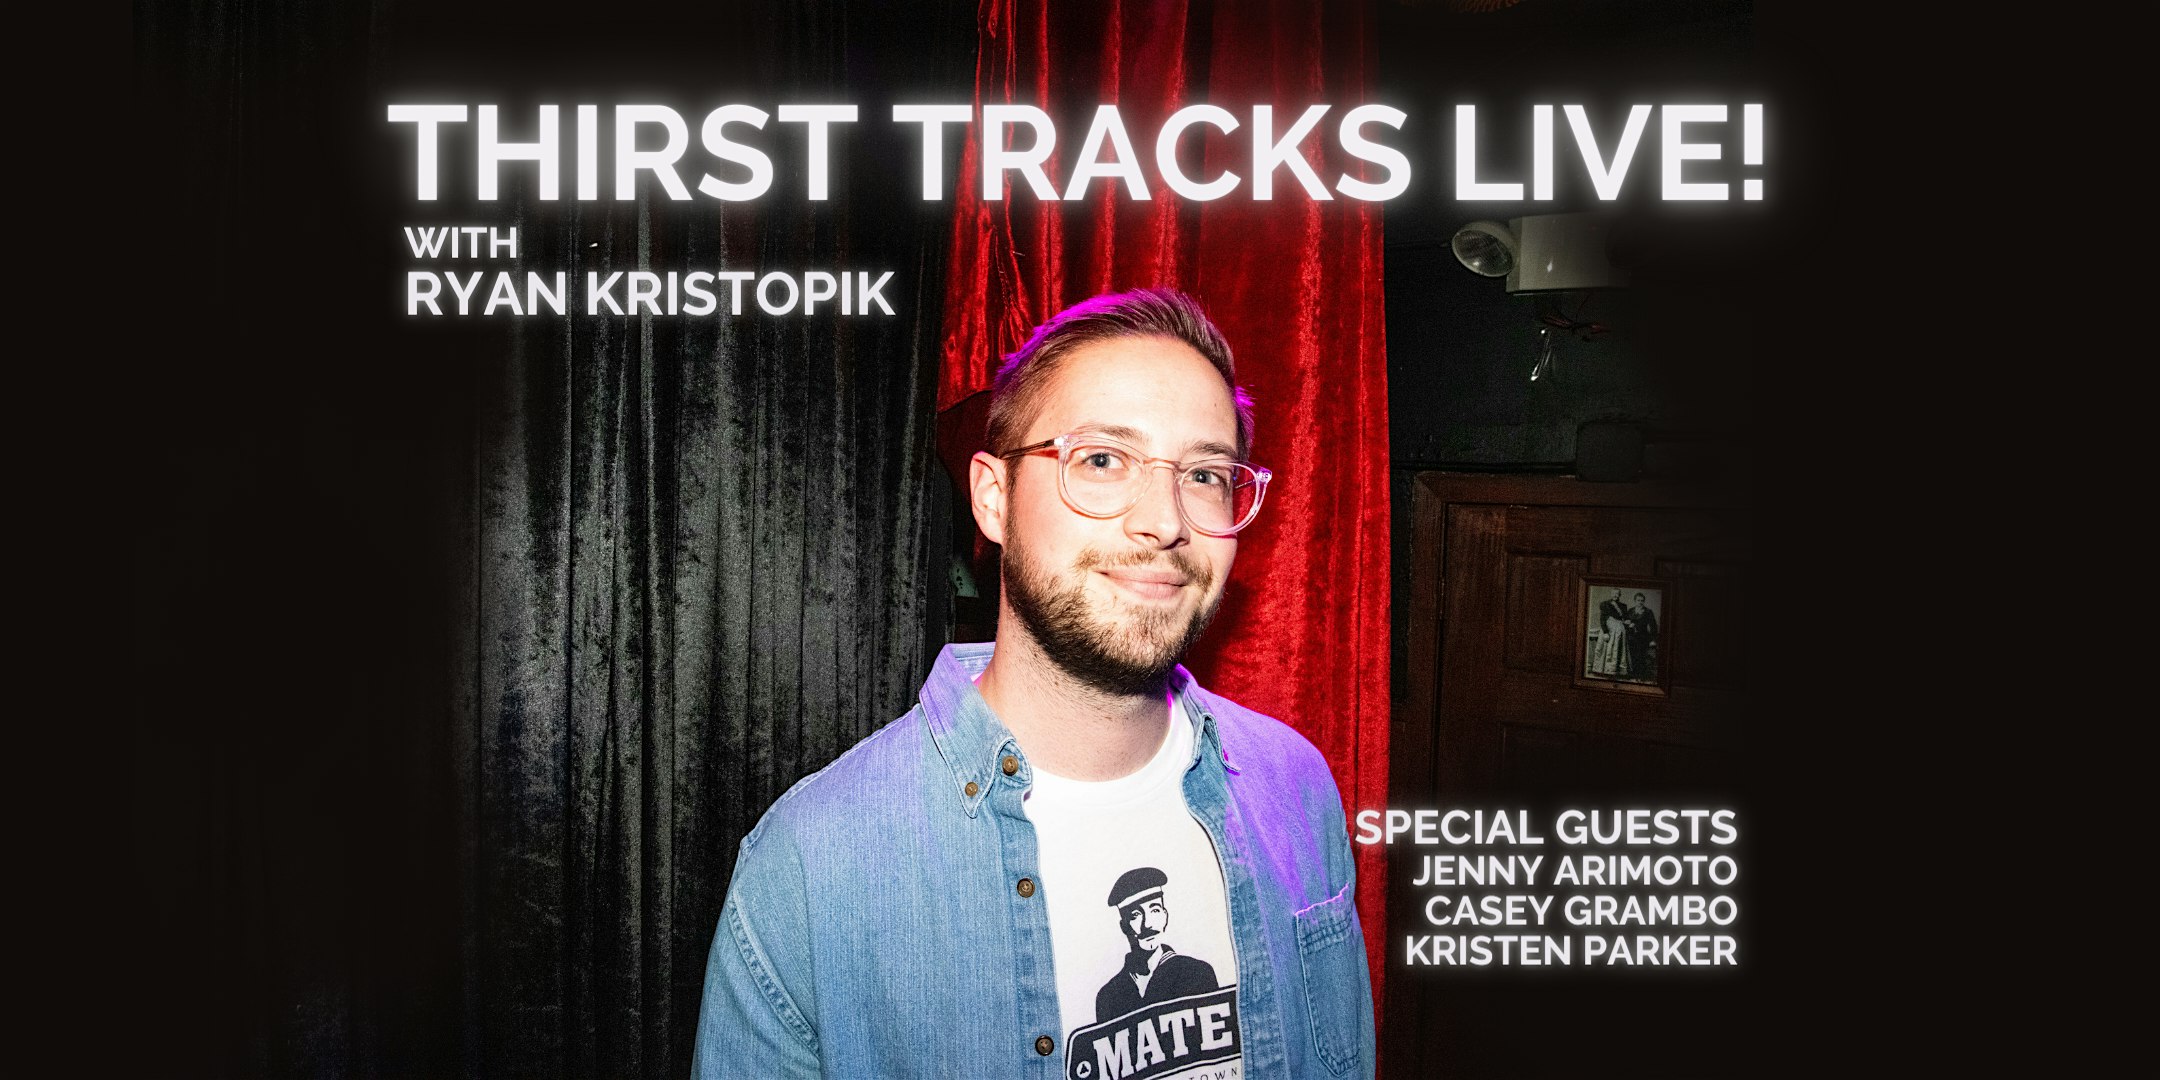 Thirst Tracks Live!  - A Musical Comedy Cabaret Starring Ryan Kristopik